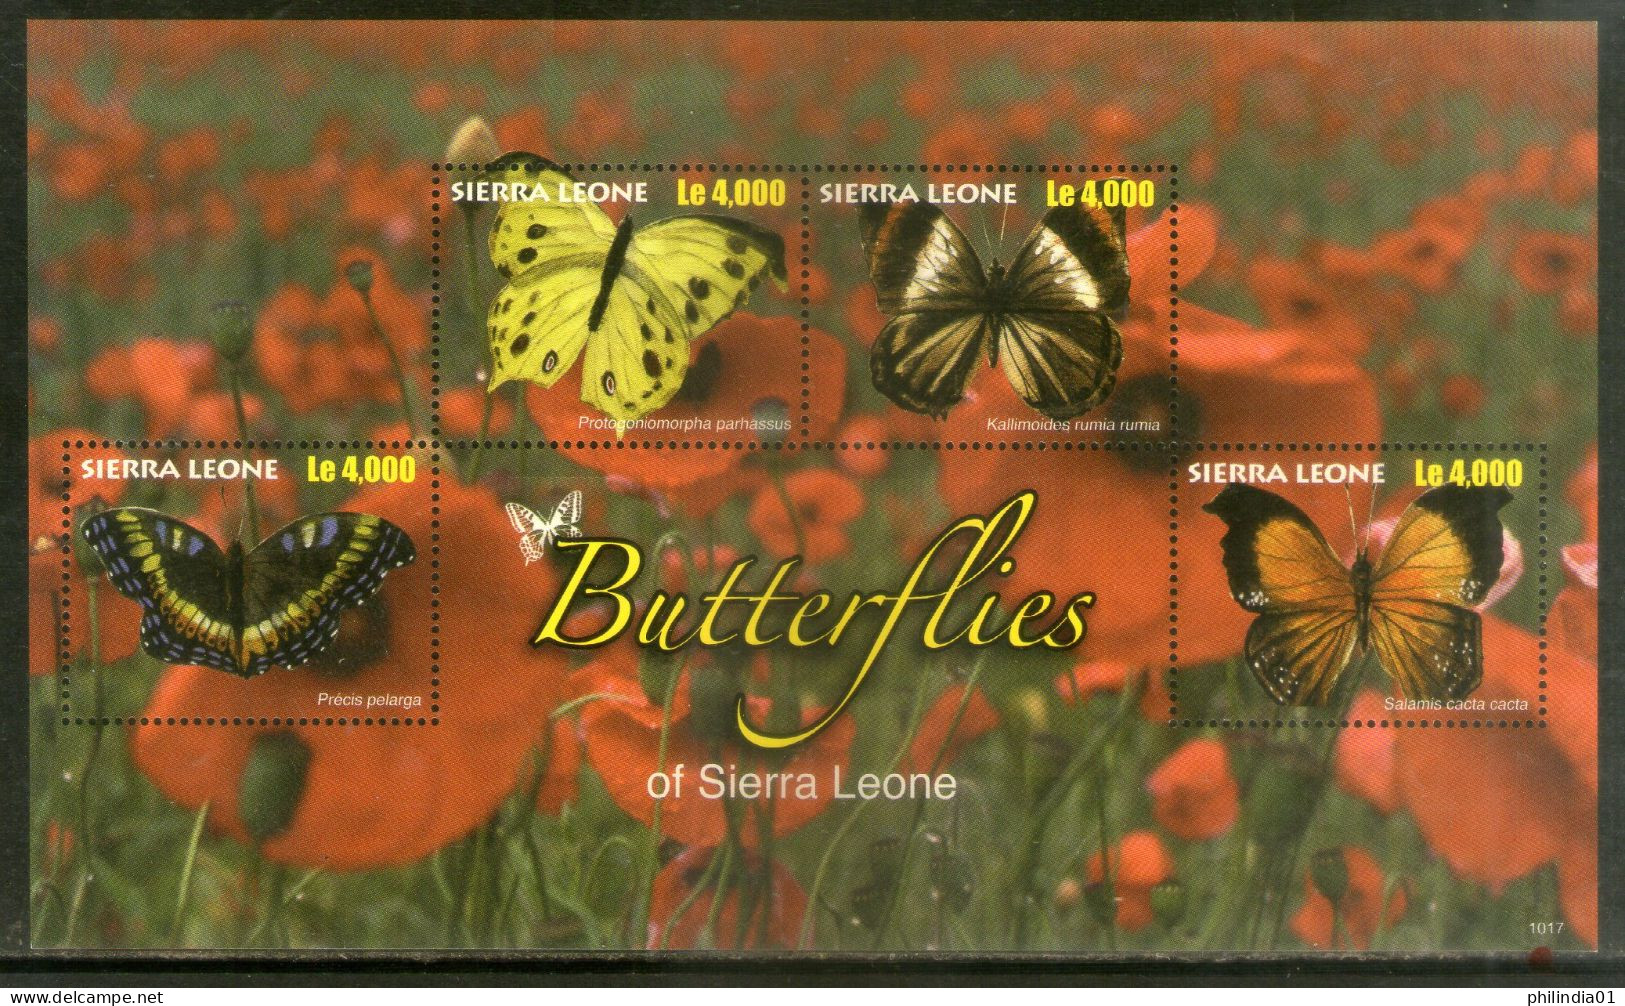 Sierra Leone 2010 Butterflies Moth Insect Sc 3030 Sheetlet MNH # 6485 - Butterflies